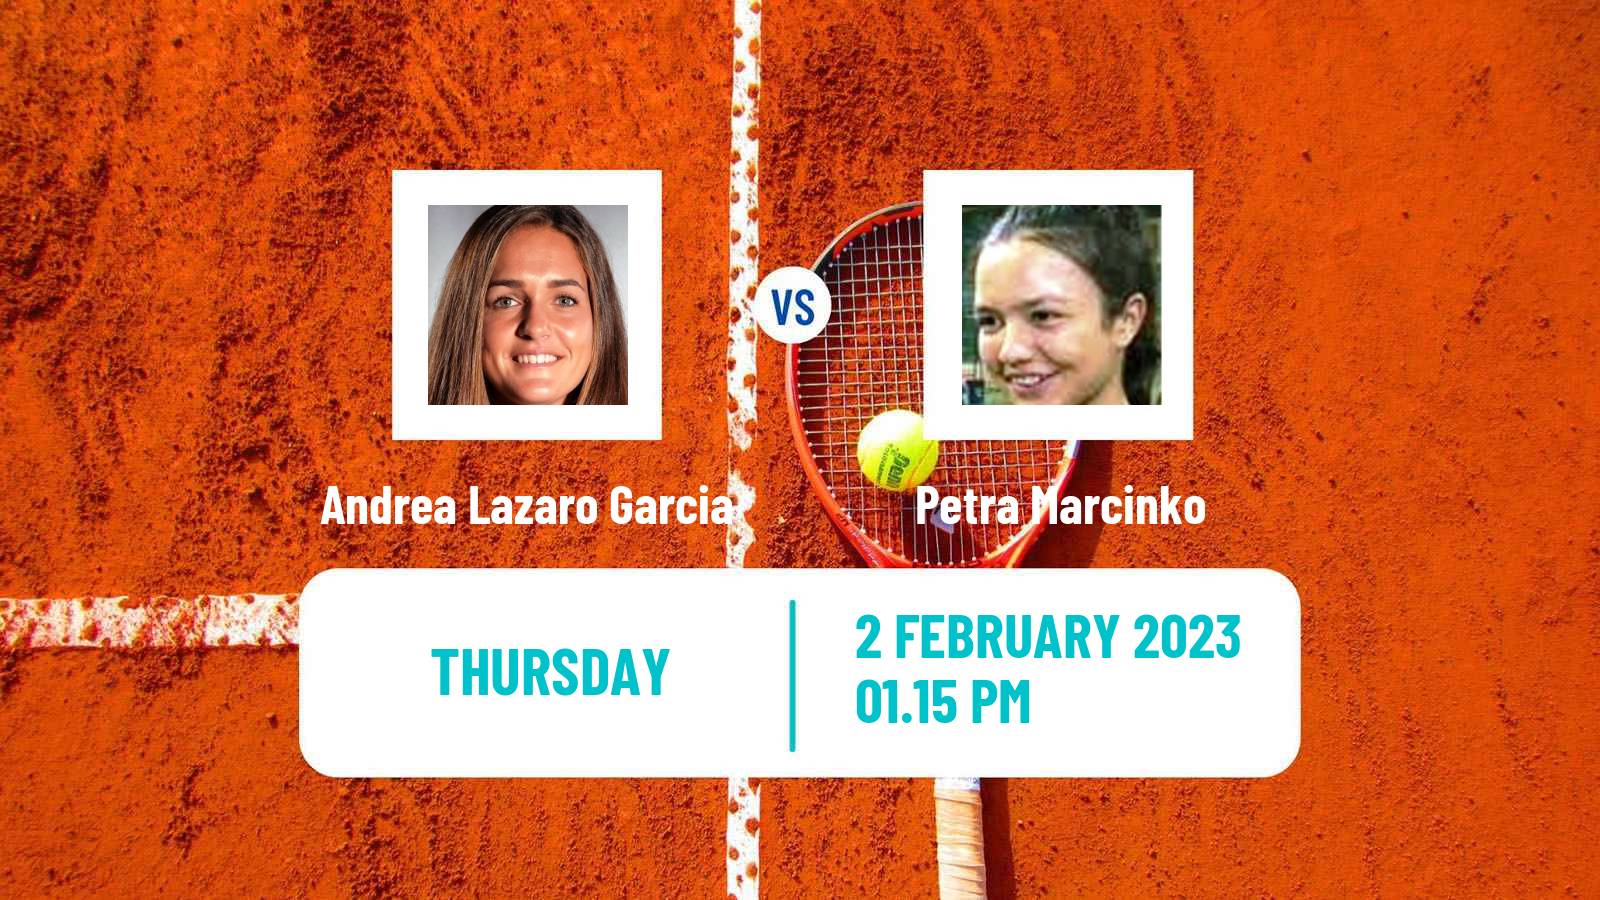 Tennis ITF Tournaments Andrea Lazaro Garcia - Petra Marcinko